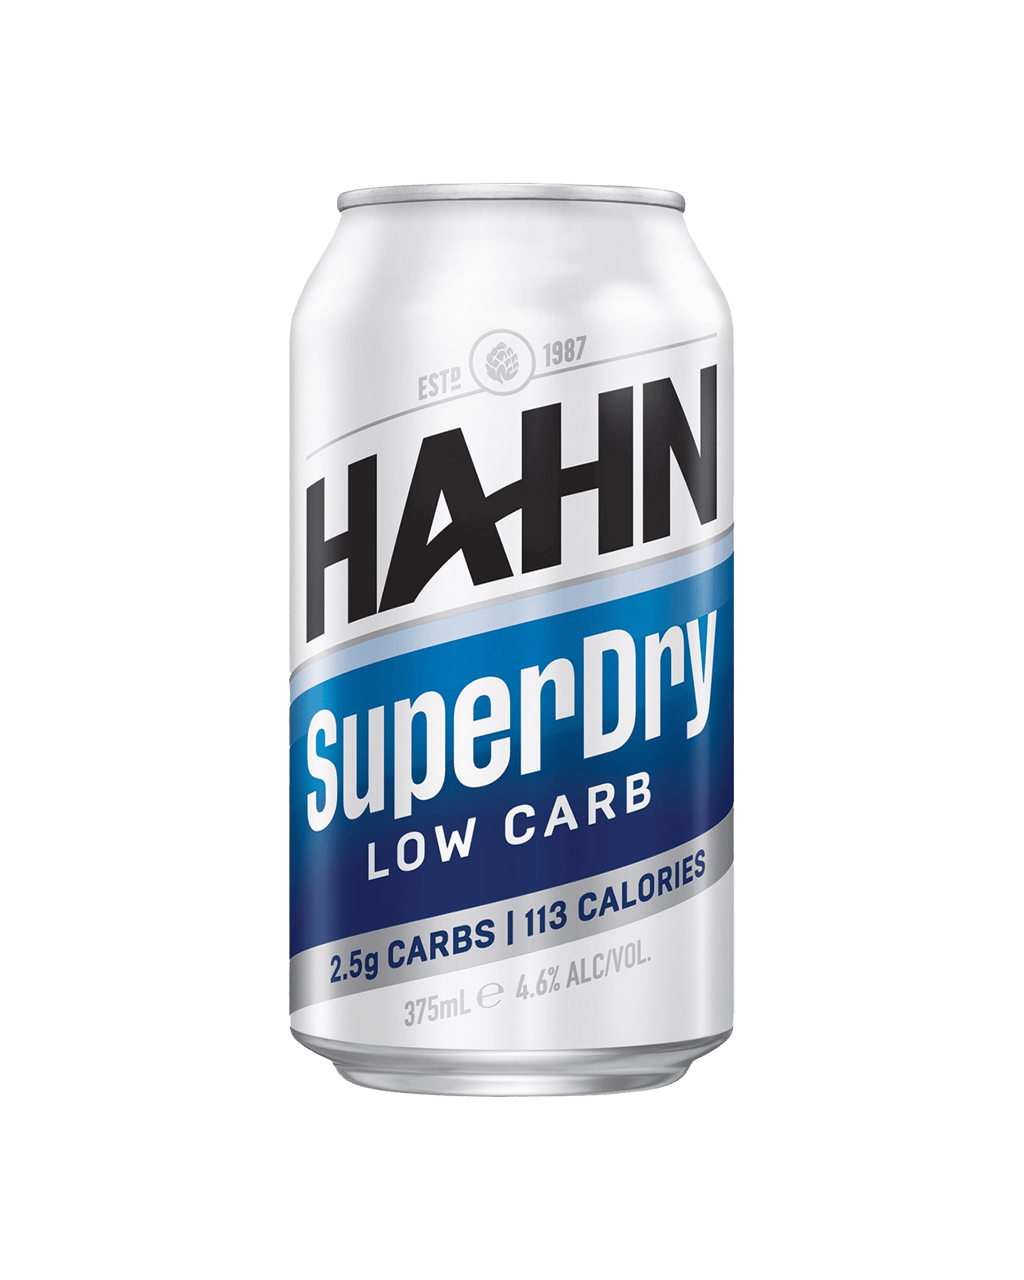 Hahn Super Dry 4.6% alc 24 x 330ml, Shorty's Liquor